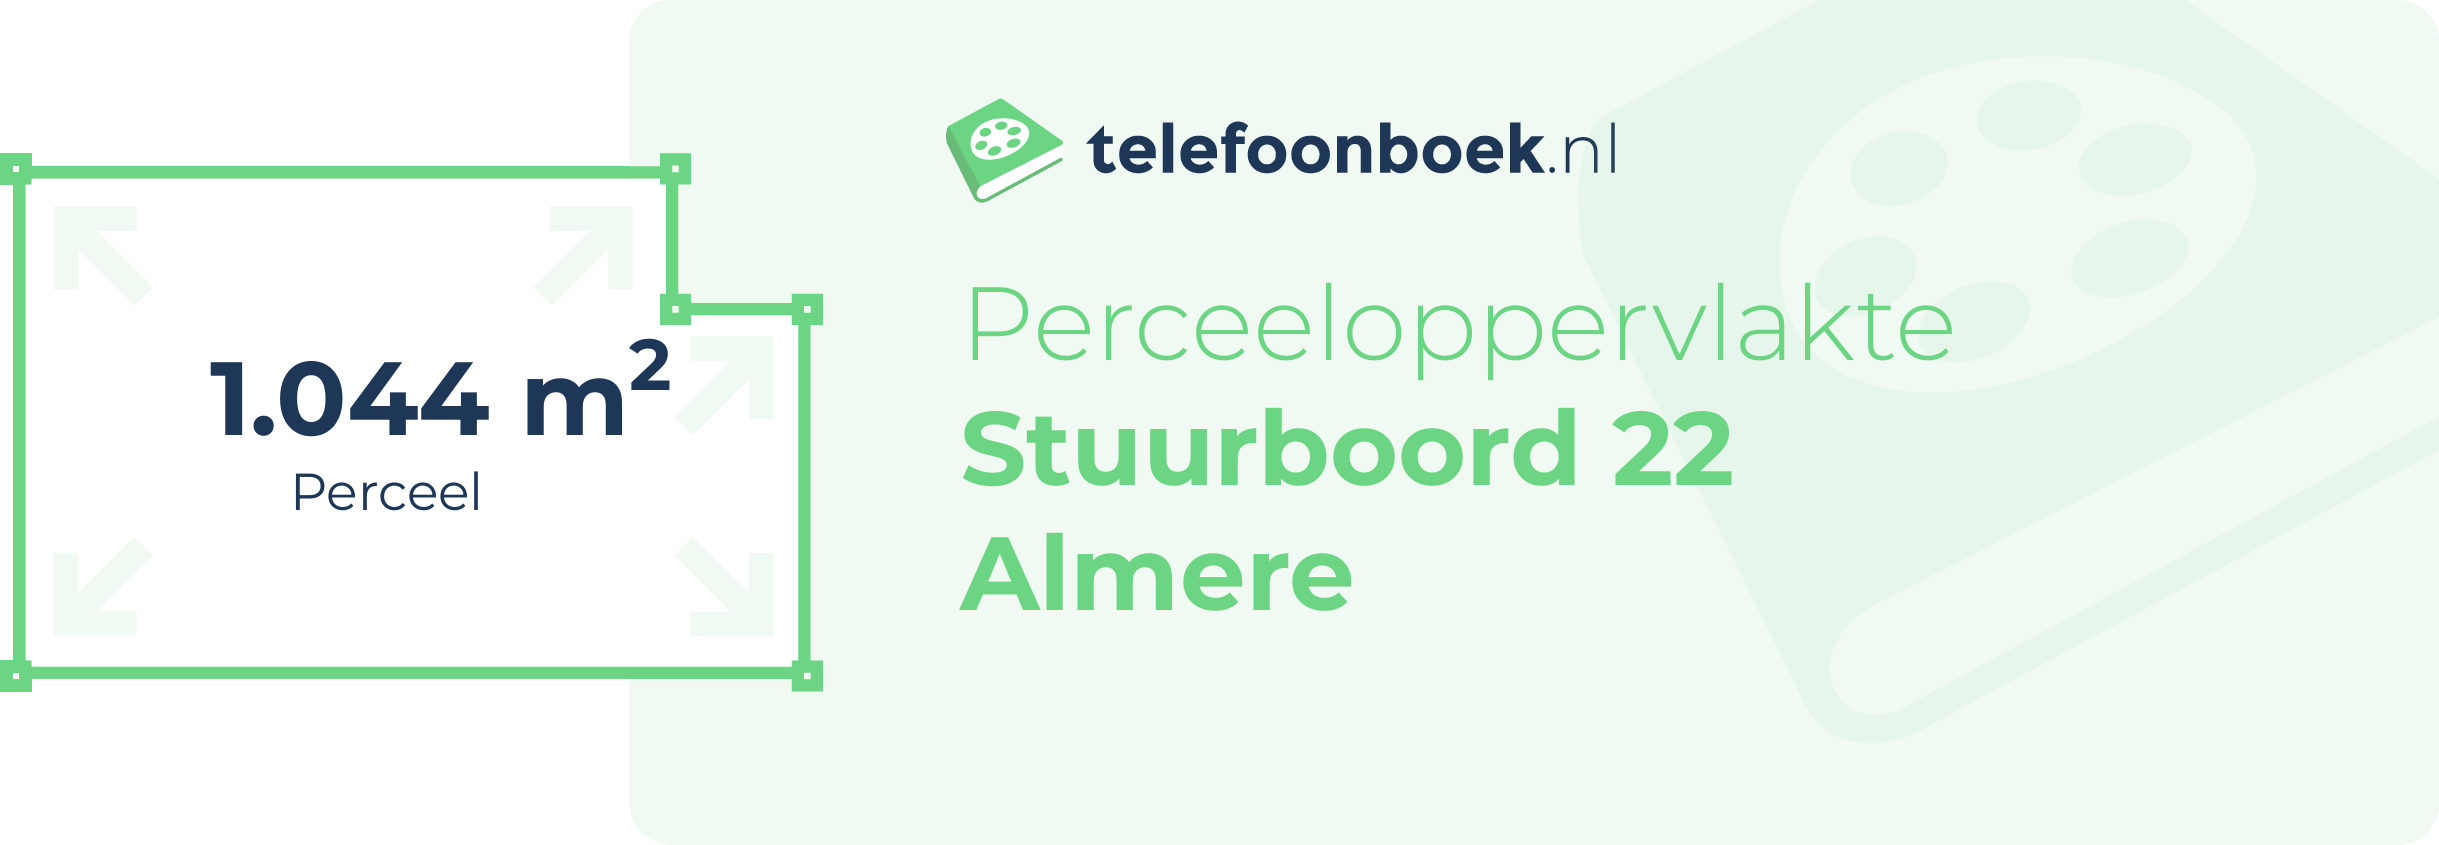 Perceeloppervlakte Stuurboord 22 Almere